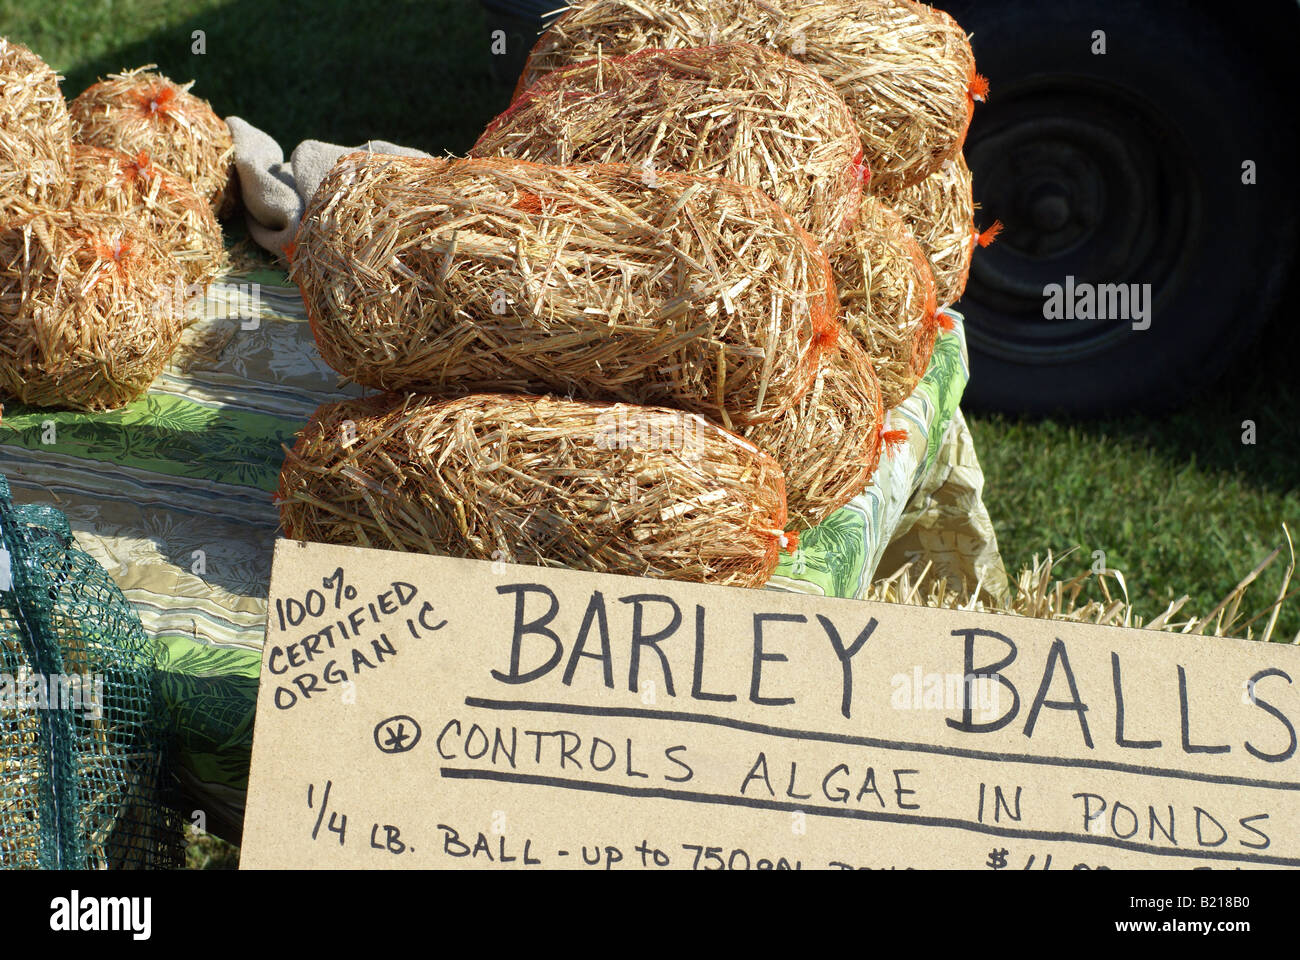 Barley balls to control algae in ponds Stock Photo